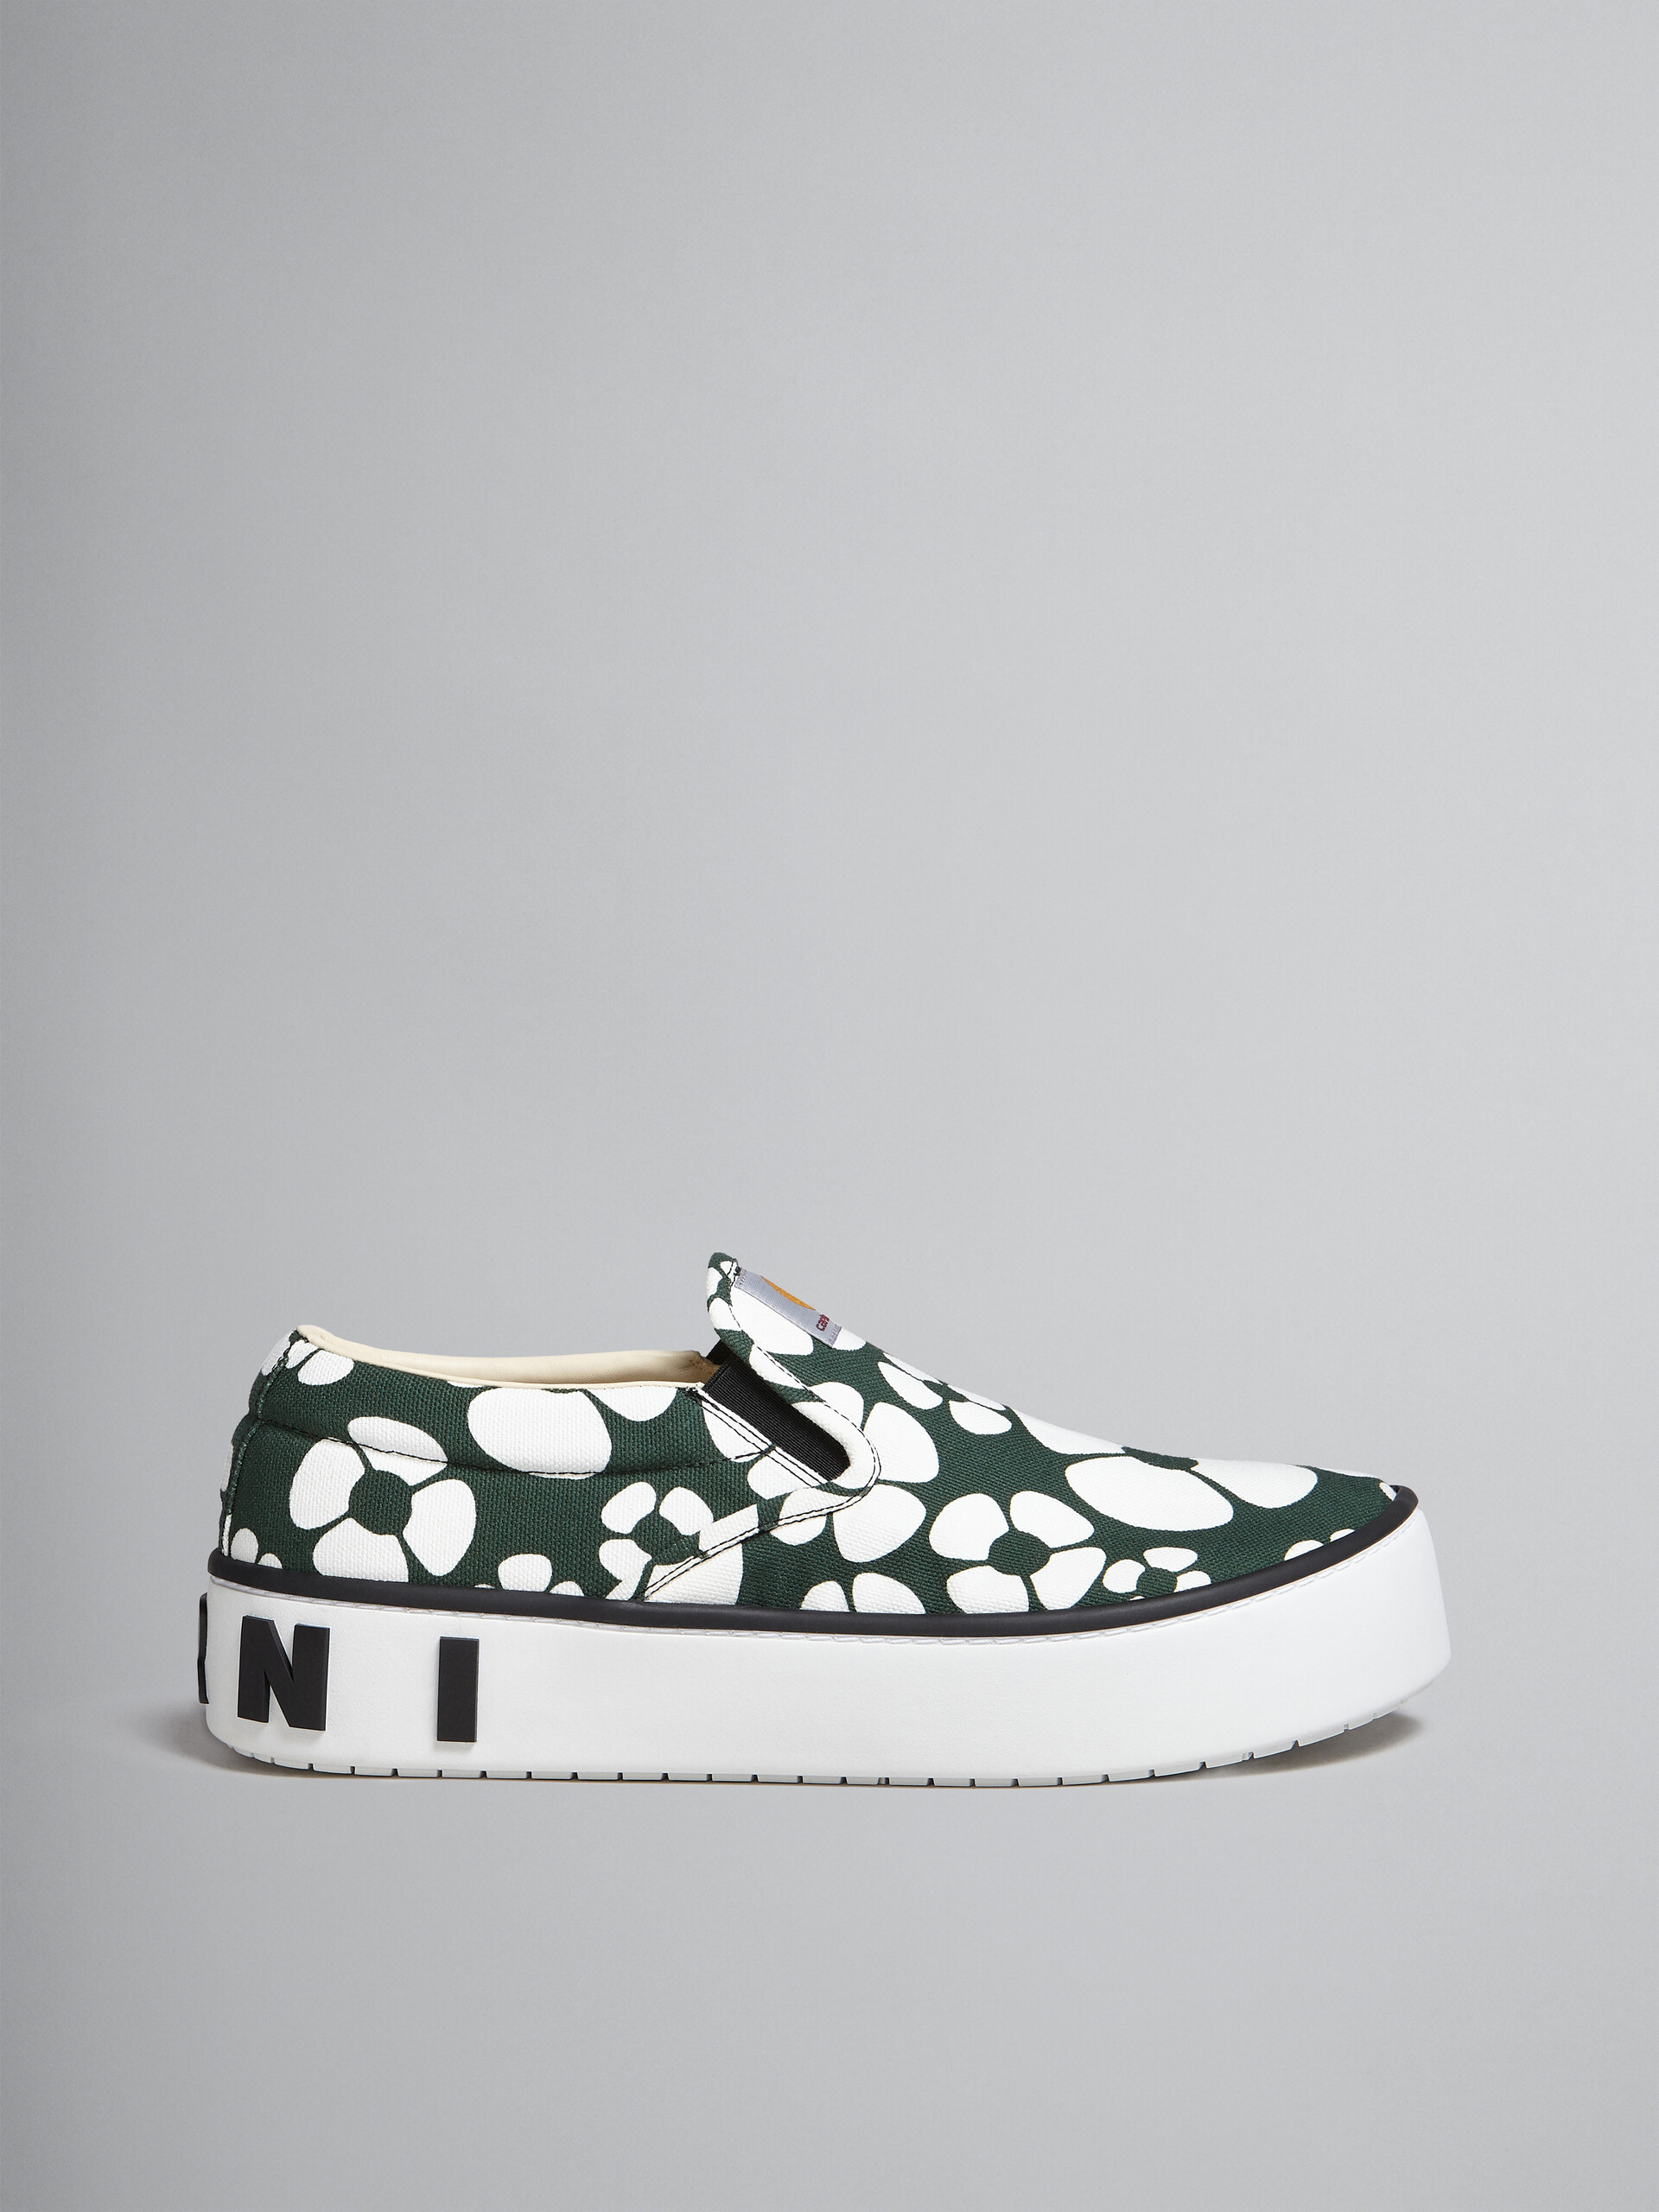 MARNI x CARHARTT WIP - green slip-on sneakers - Sneakers - Image 1